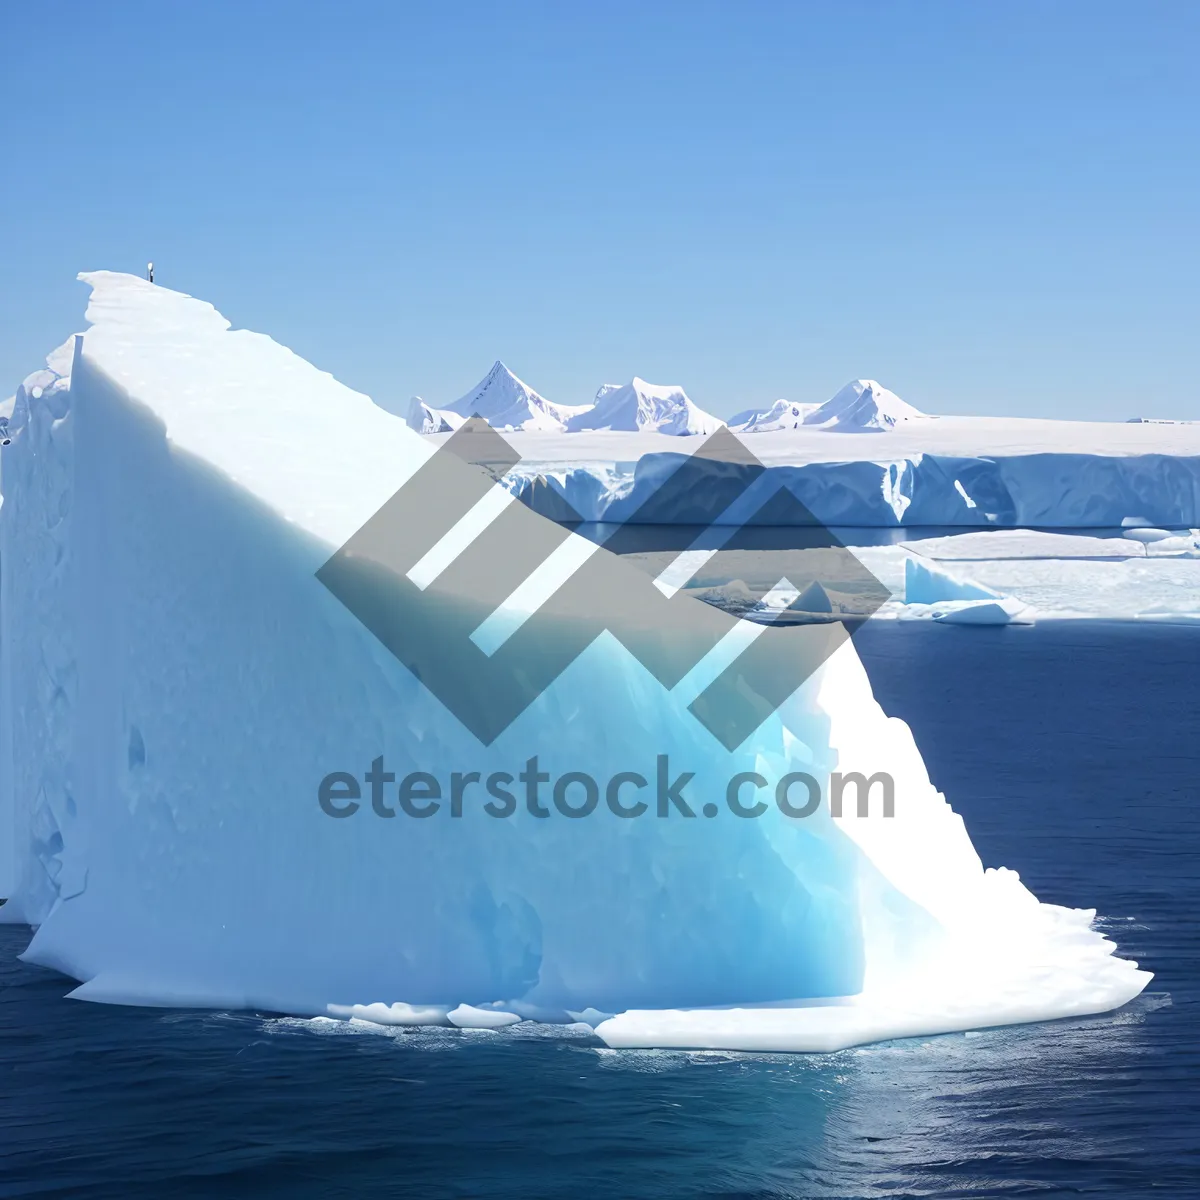 Picture of Majestic Arctic Glacier in Winter Wonderland